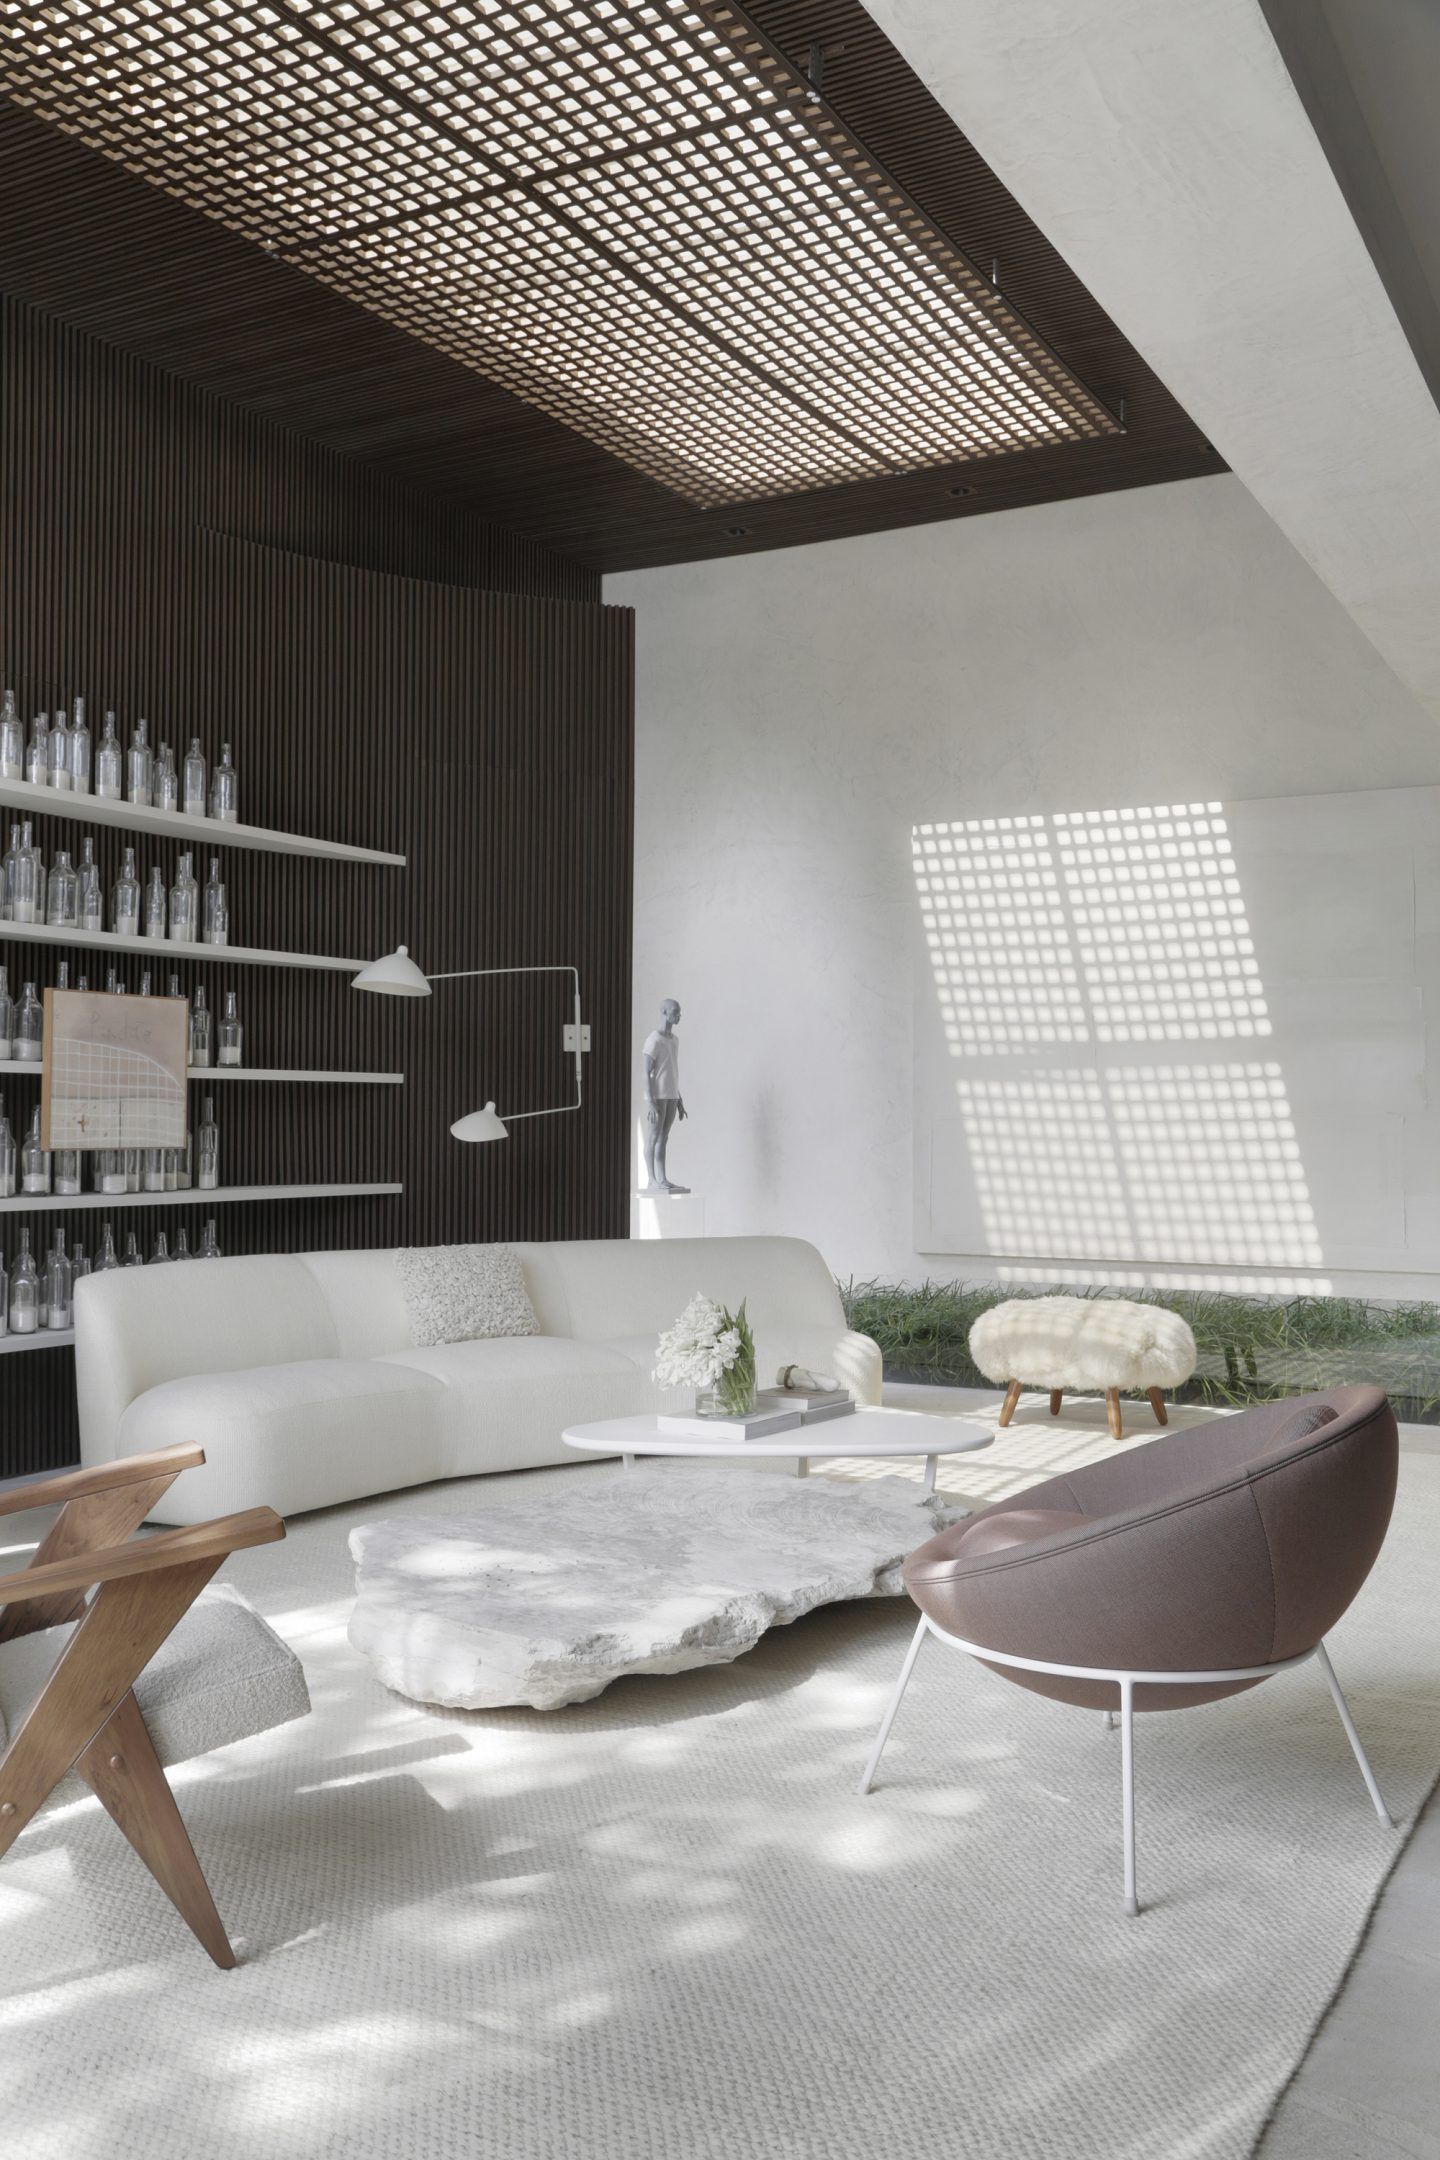 IGNANT-Architecture-Dende-Duratex-Concept-House-02